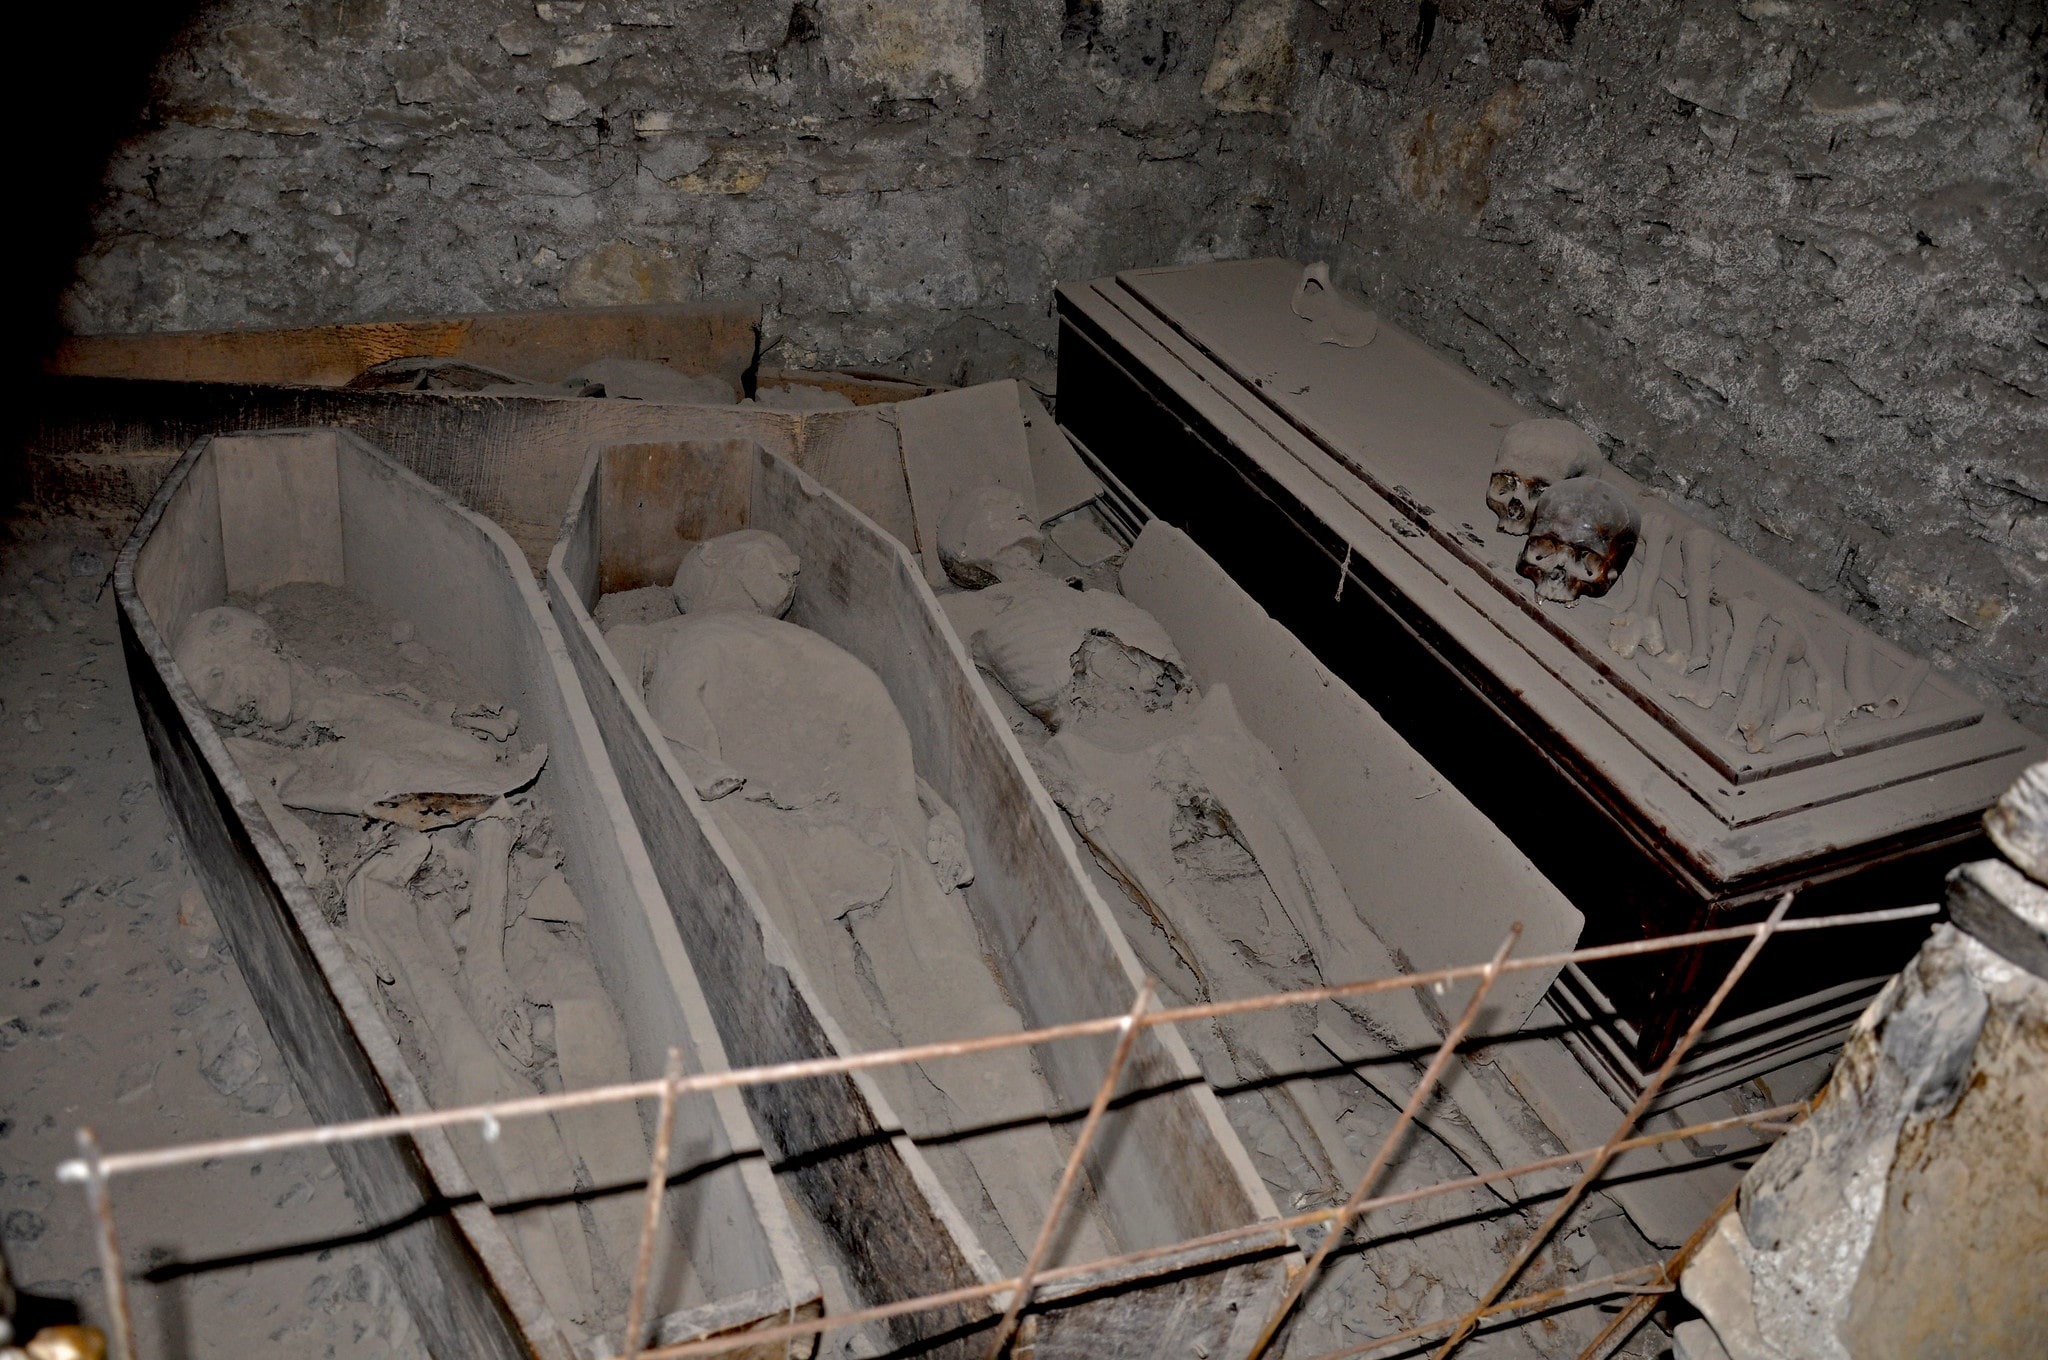 St. Michan’s Mummies are off the beaten path in Ireland